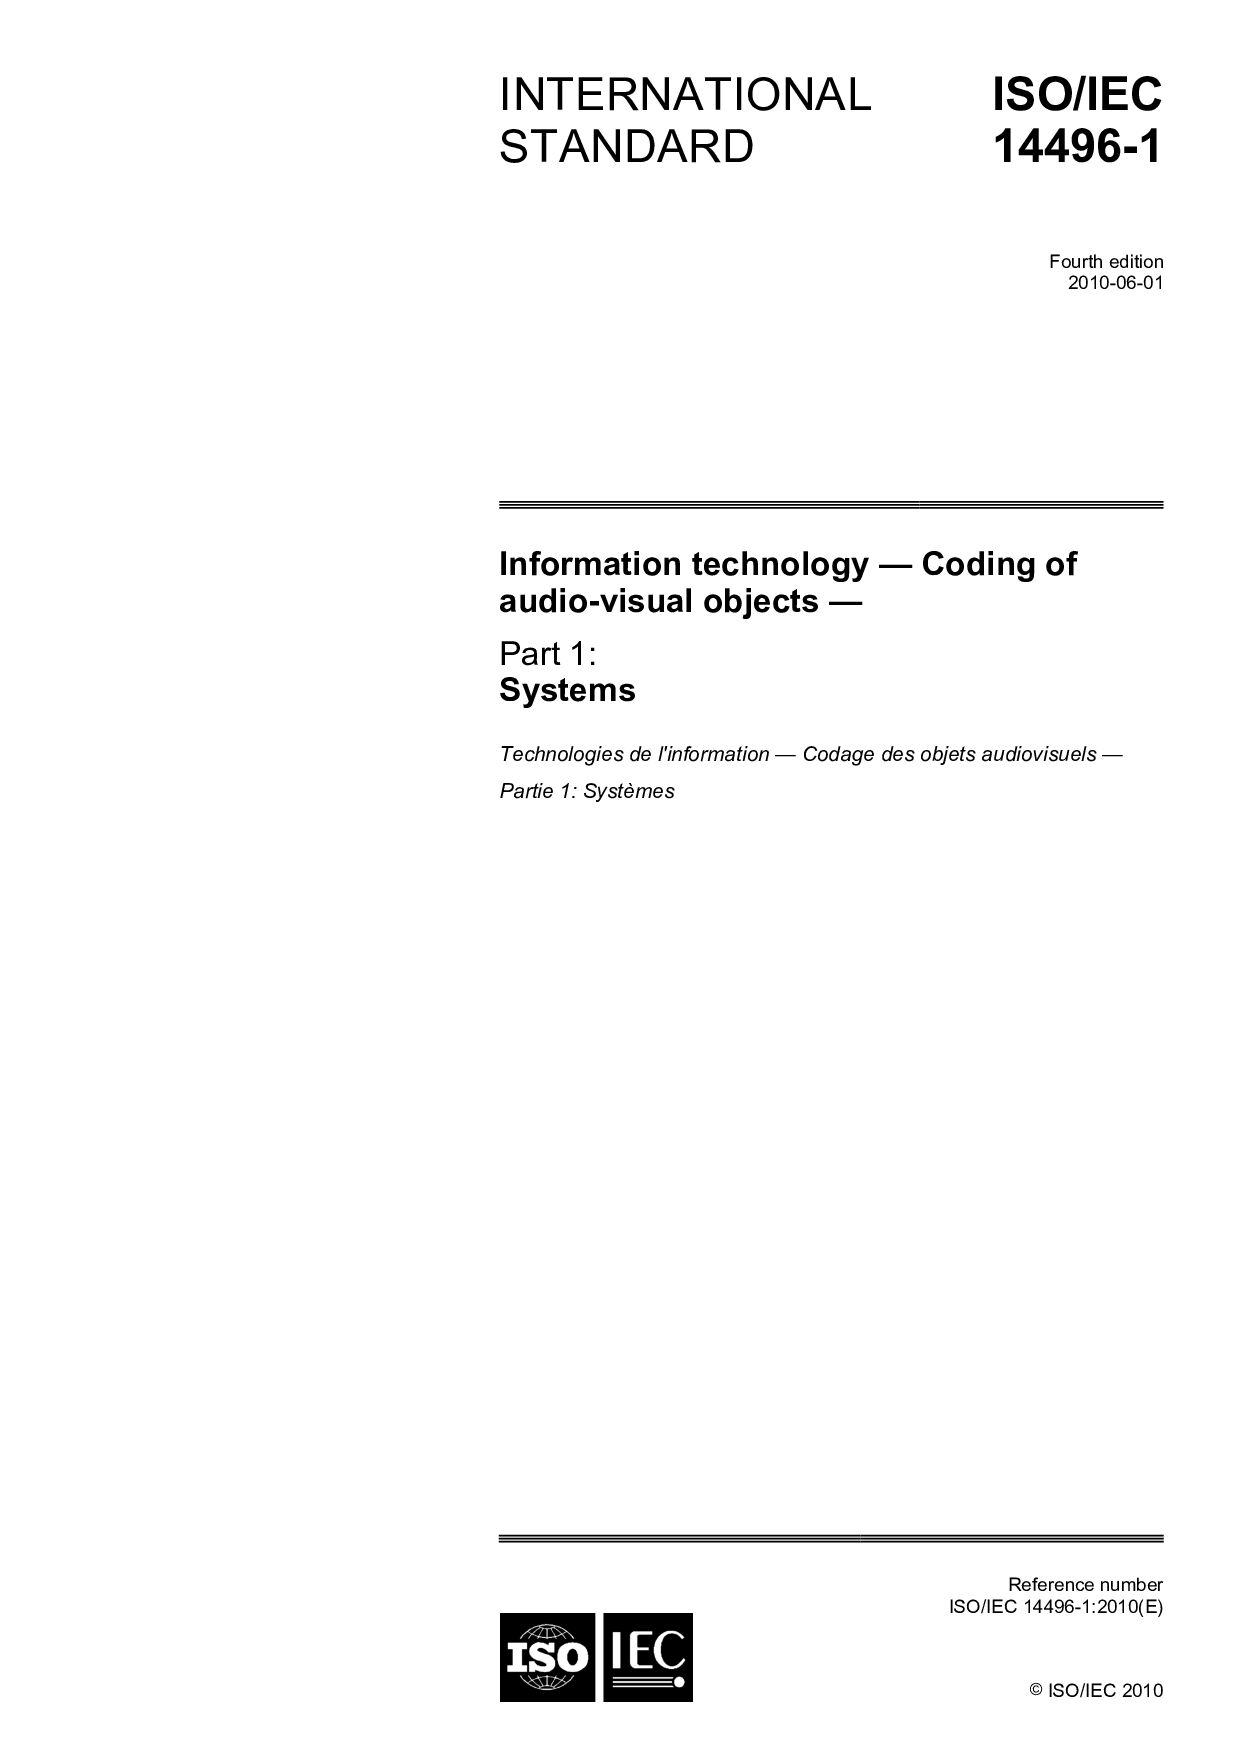 ISO/IEC 14496-1:2010